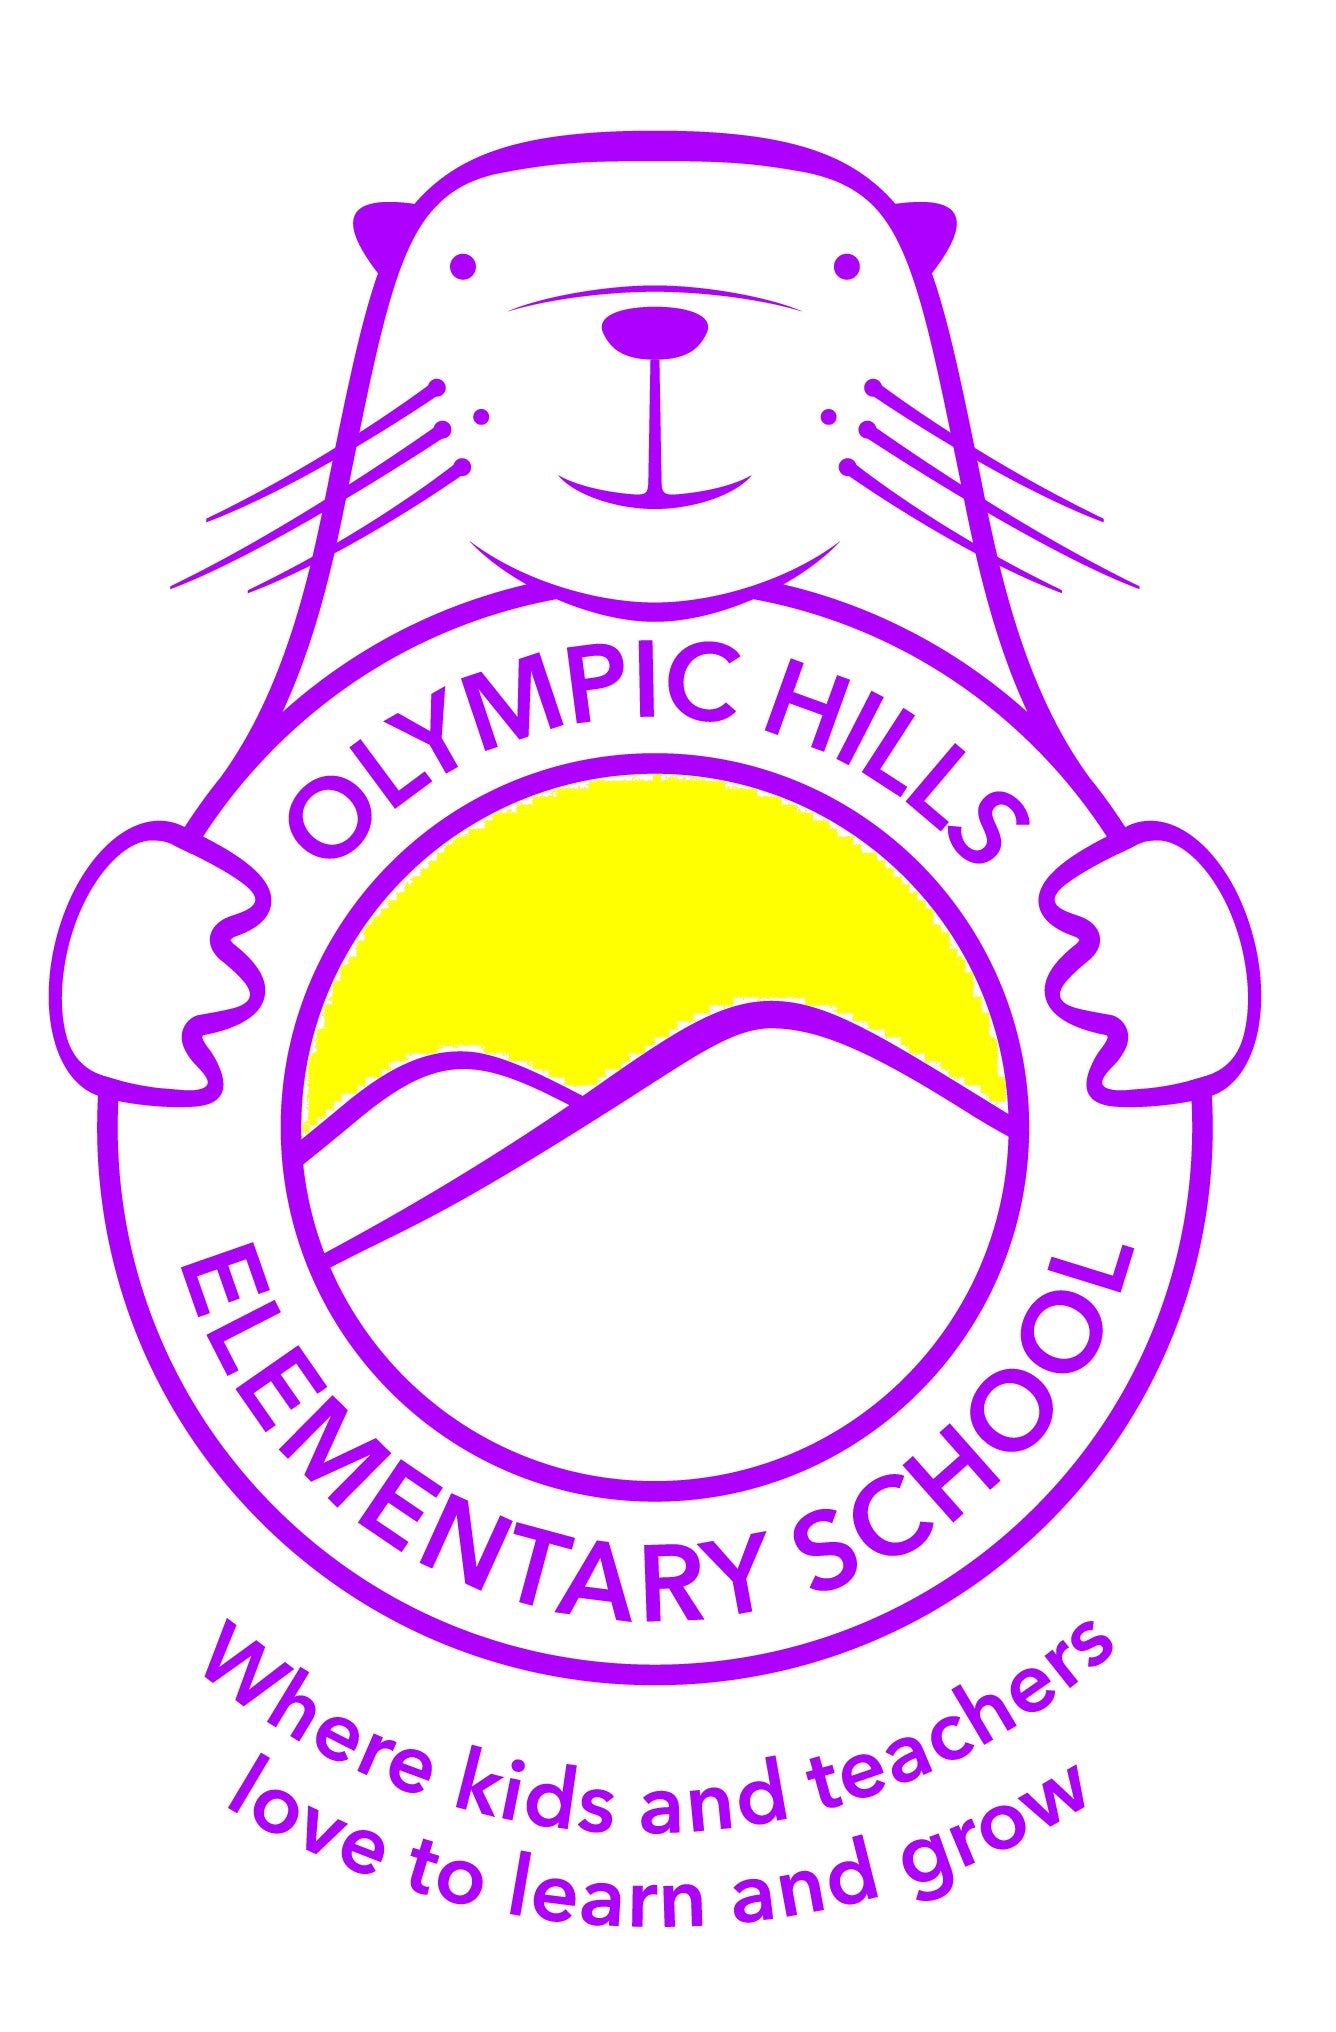 Olympic Hills Elementary